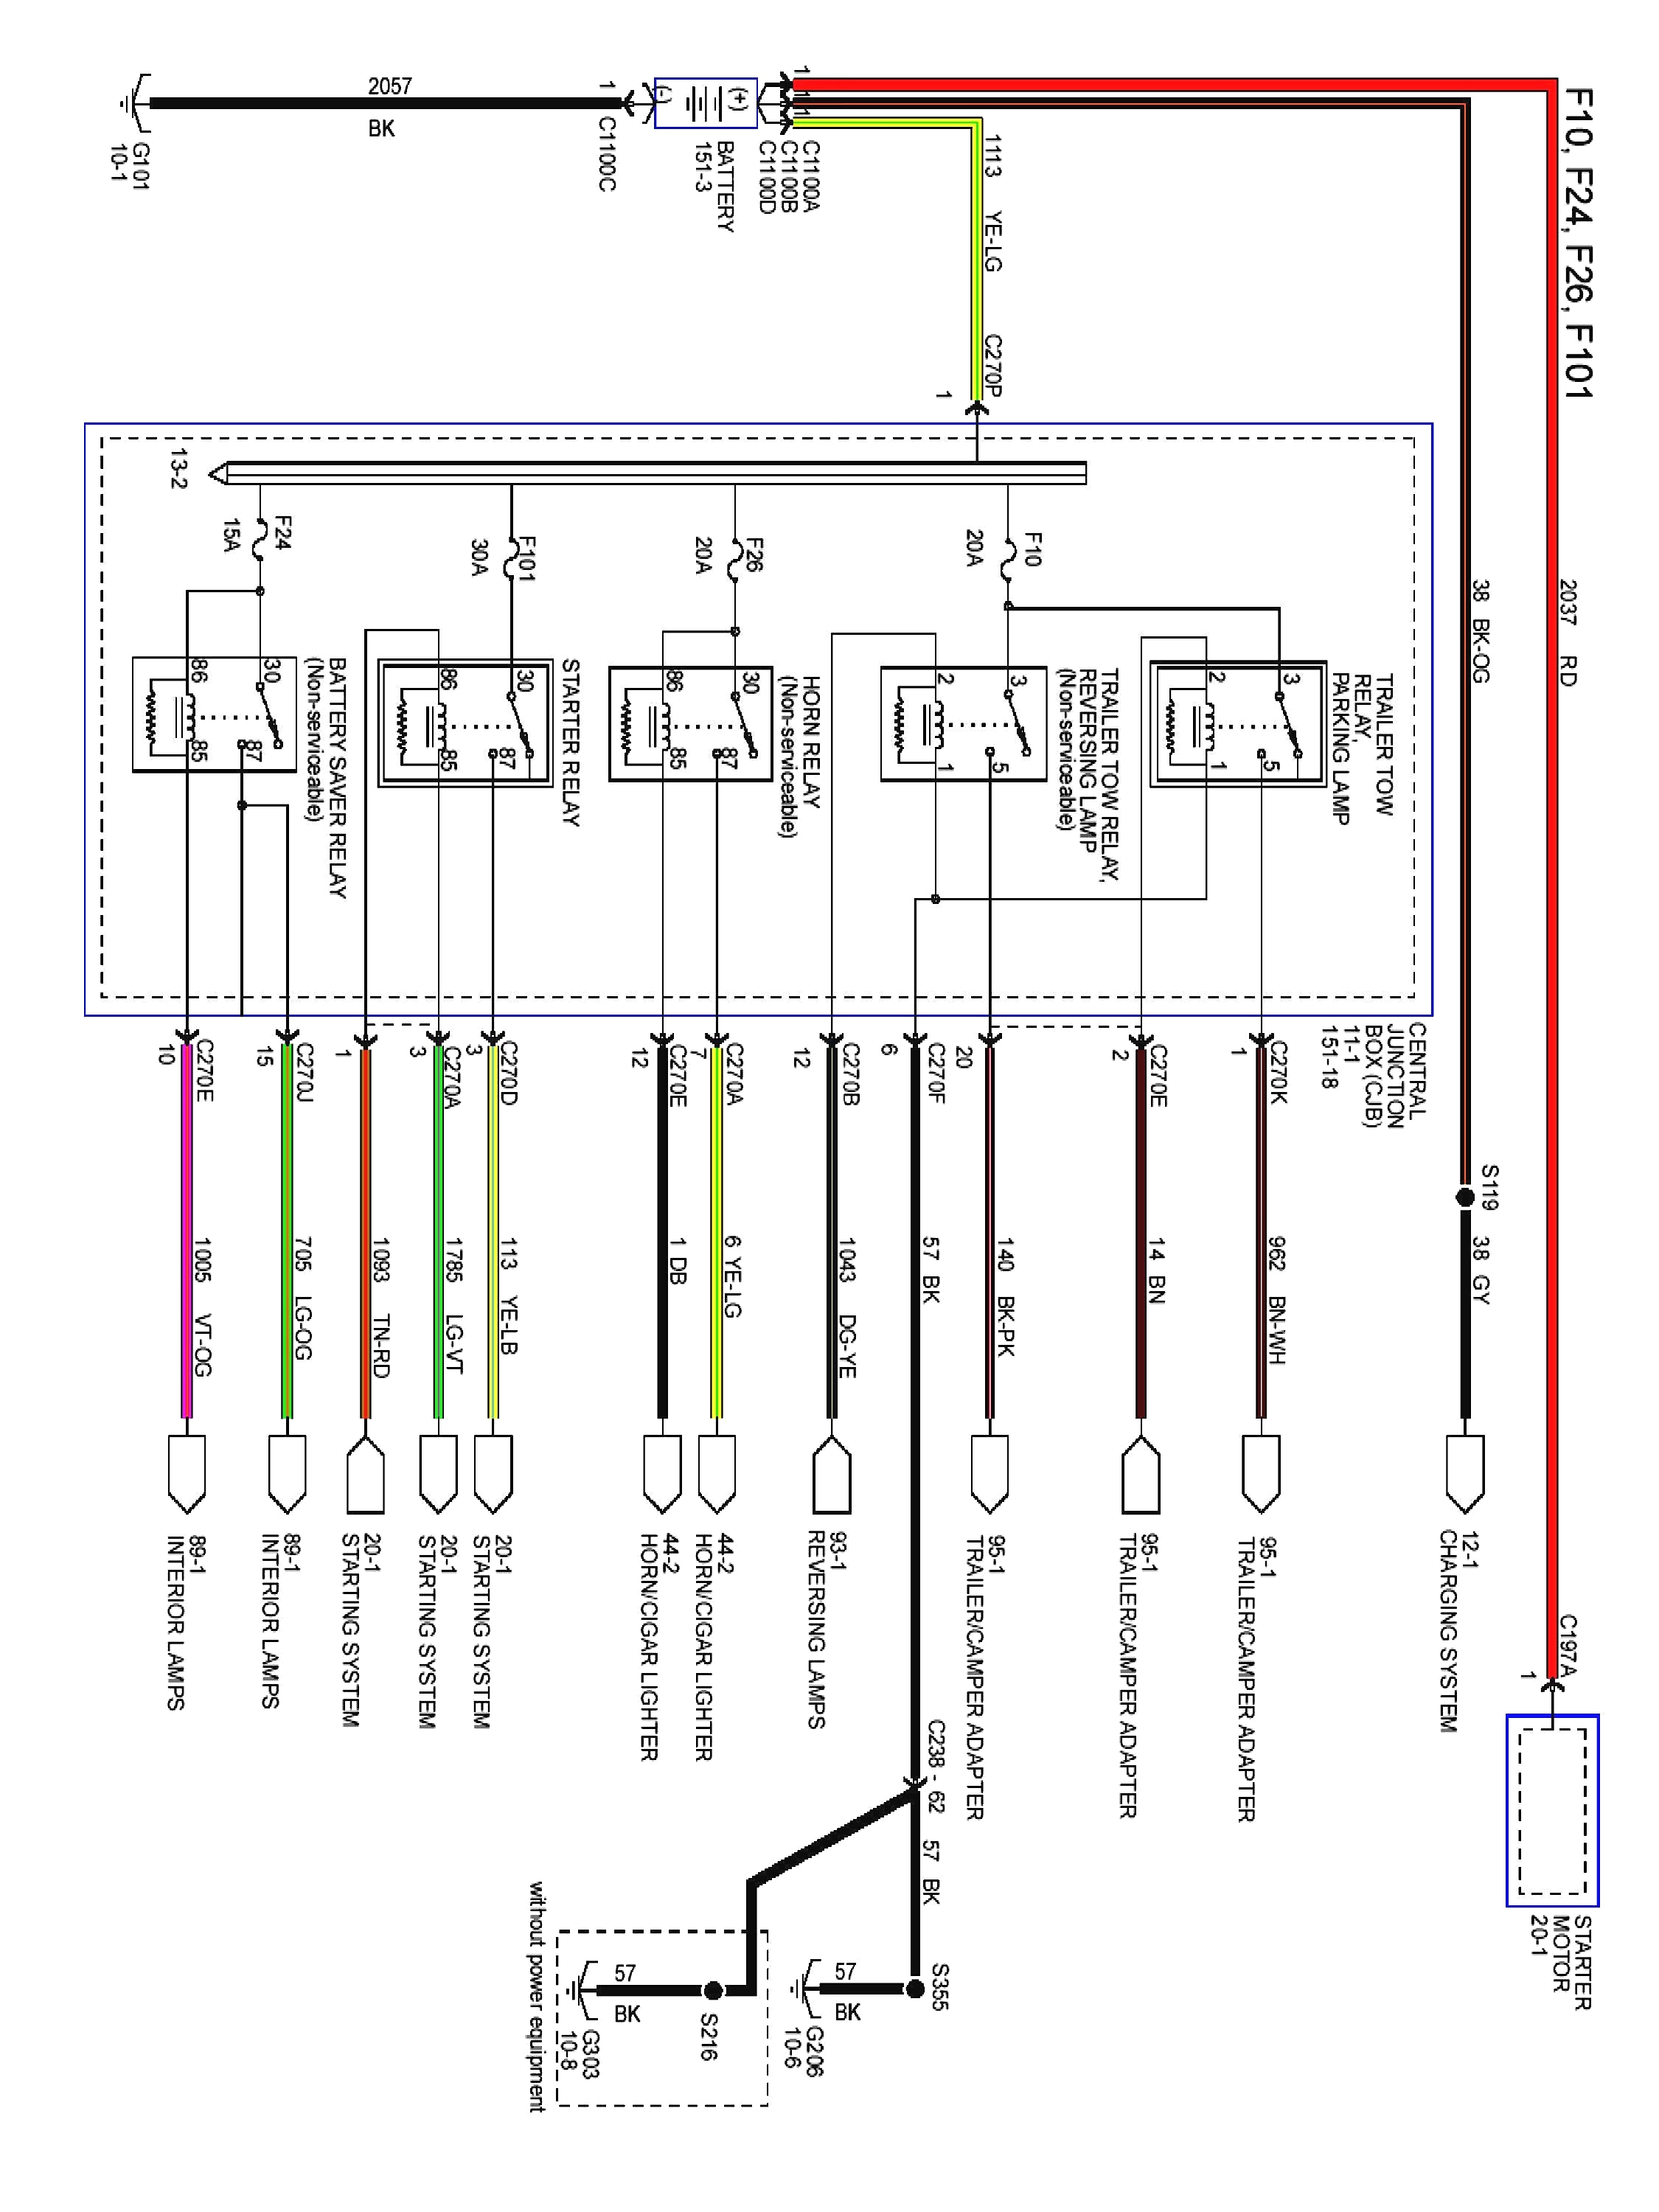 04 ford wiring diagram wiring librarysolydine m28 wiring diagram 20